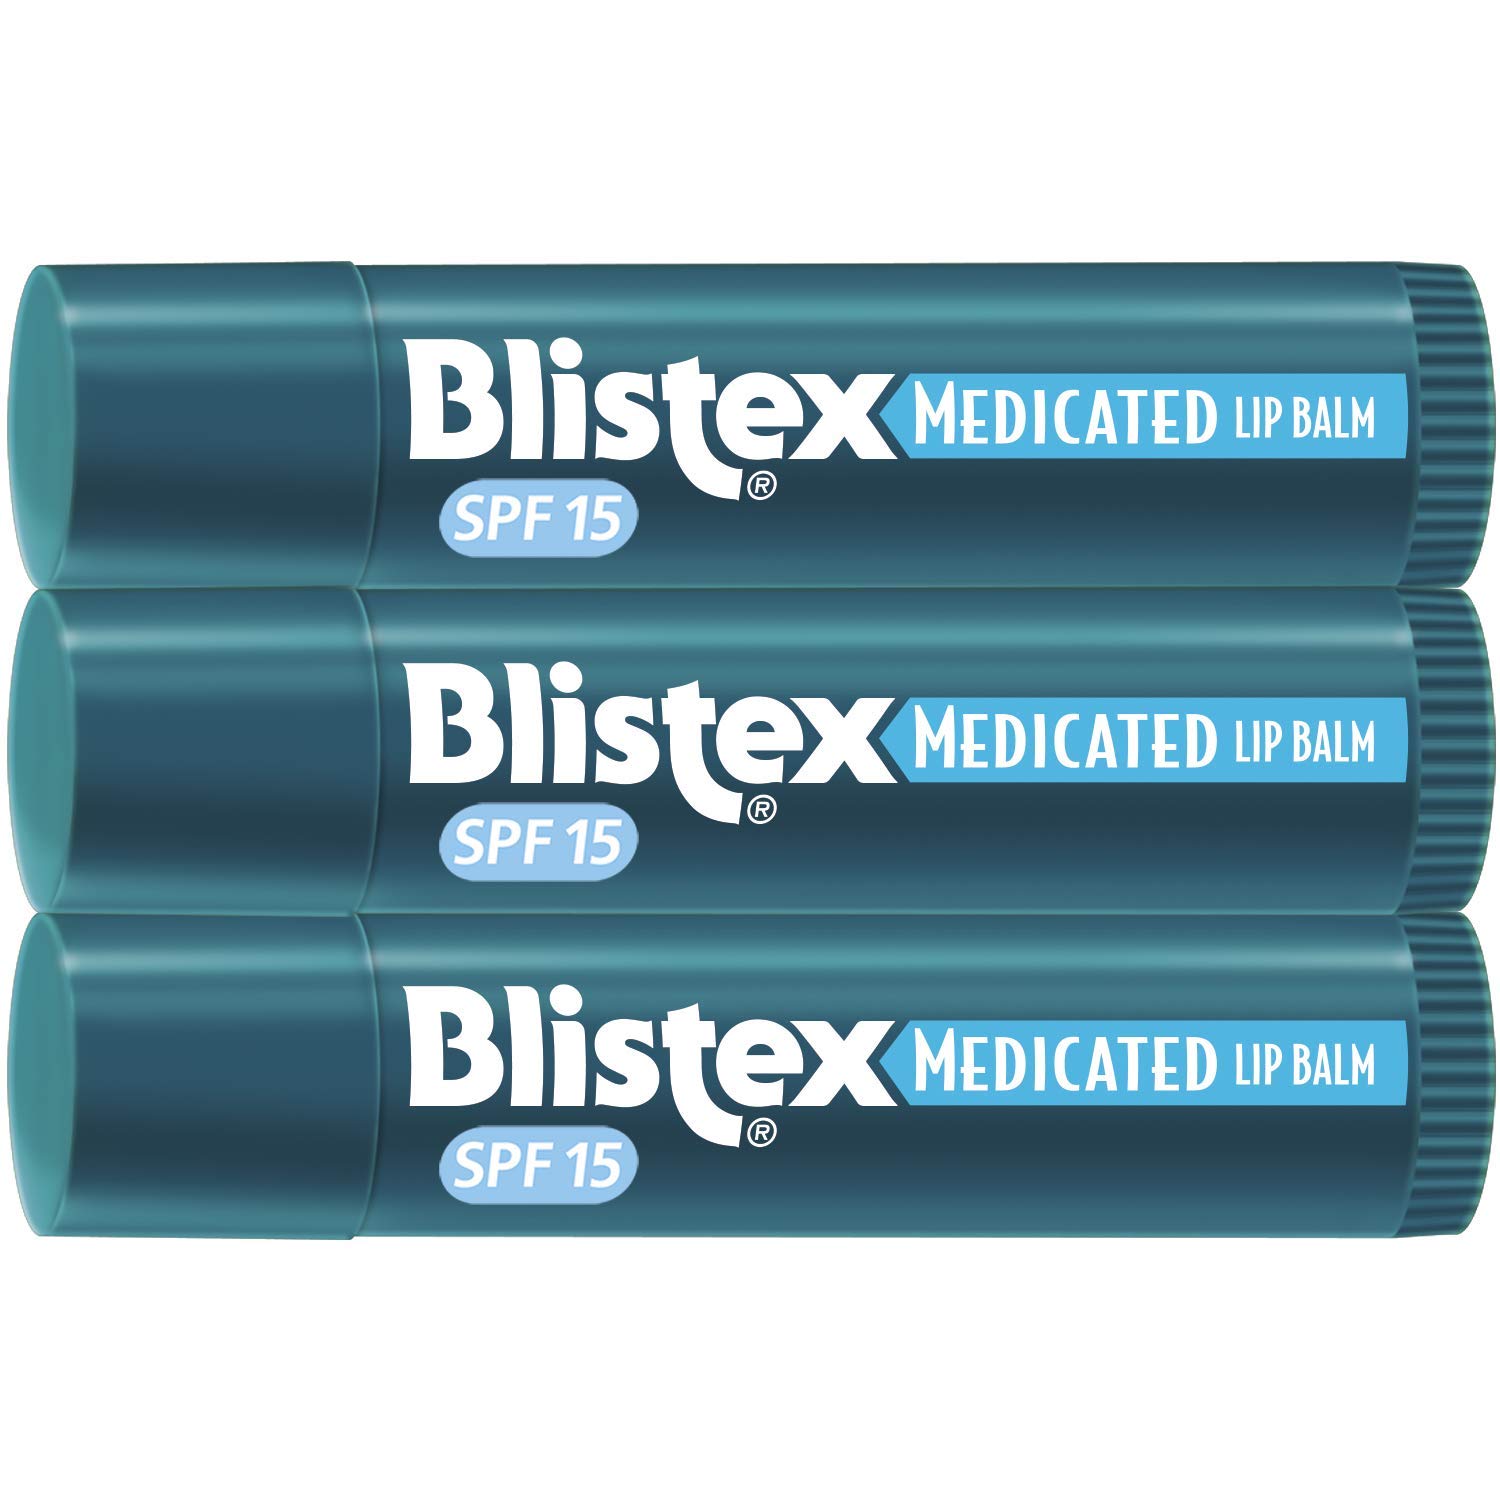 Blistex Medicated Lip Balms 3-Pack for $2